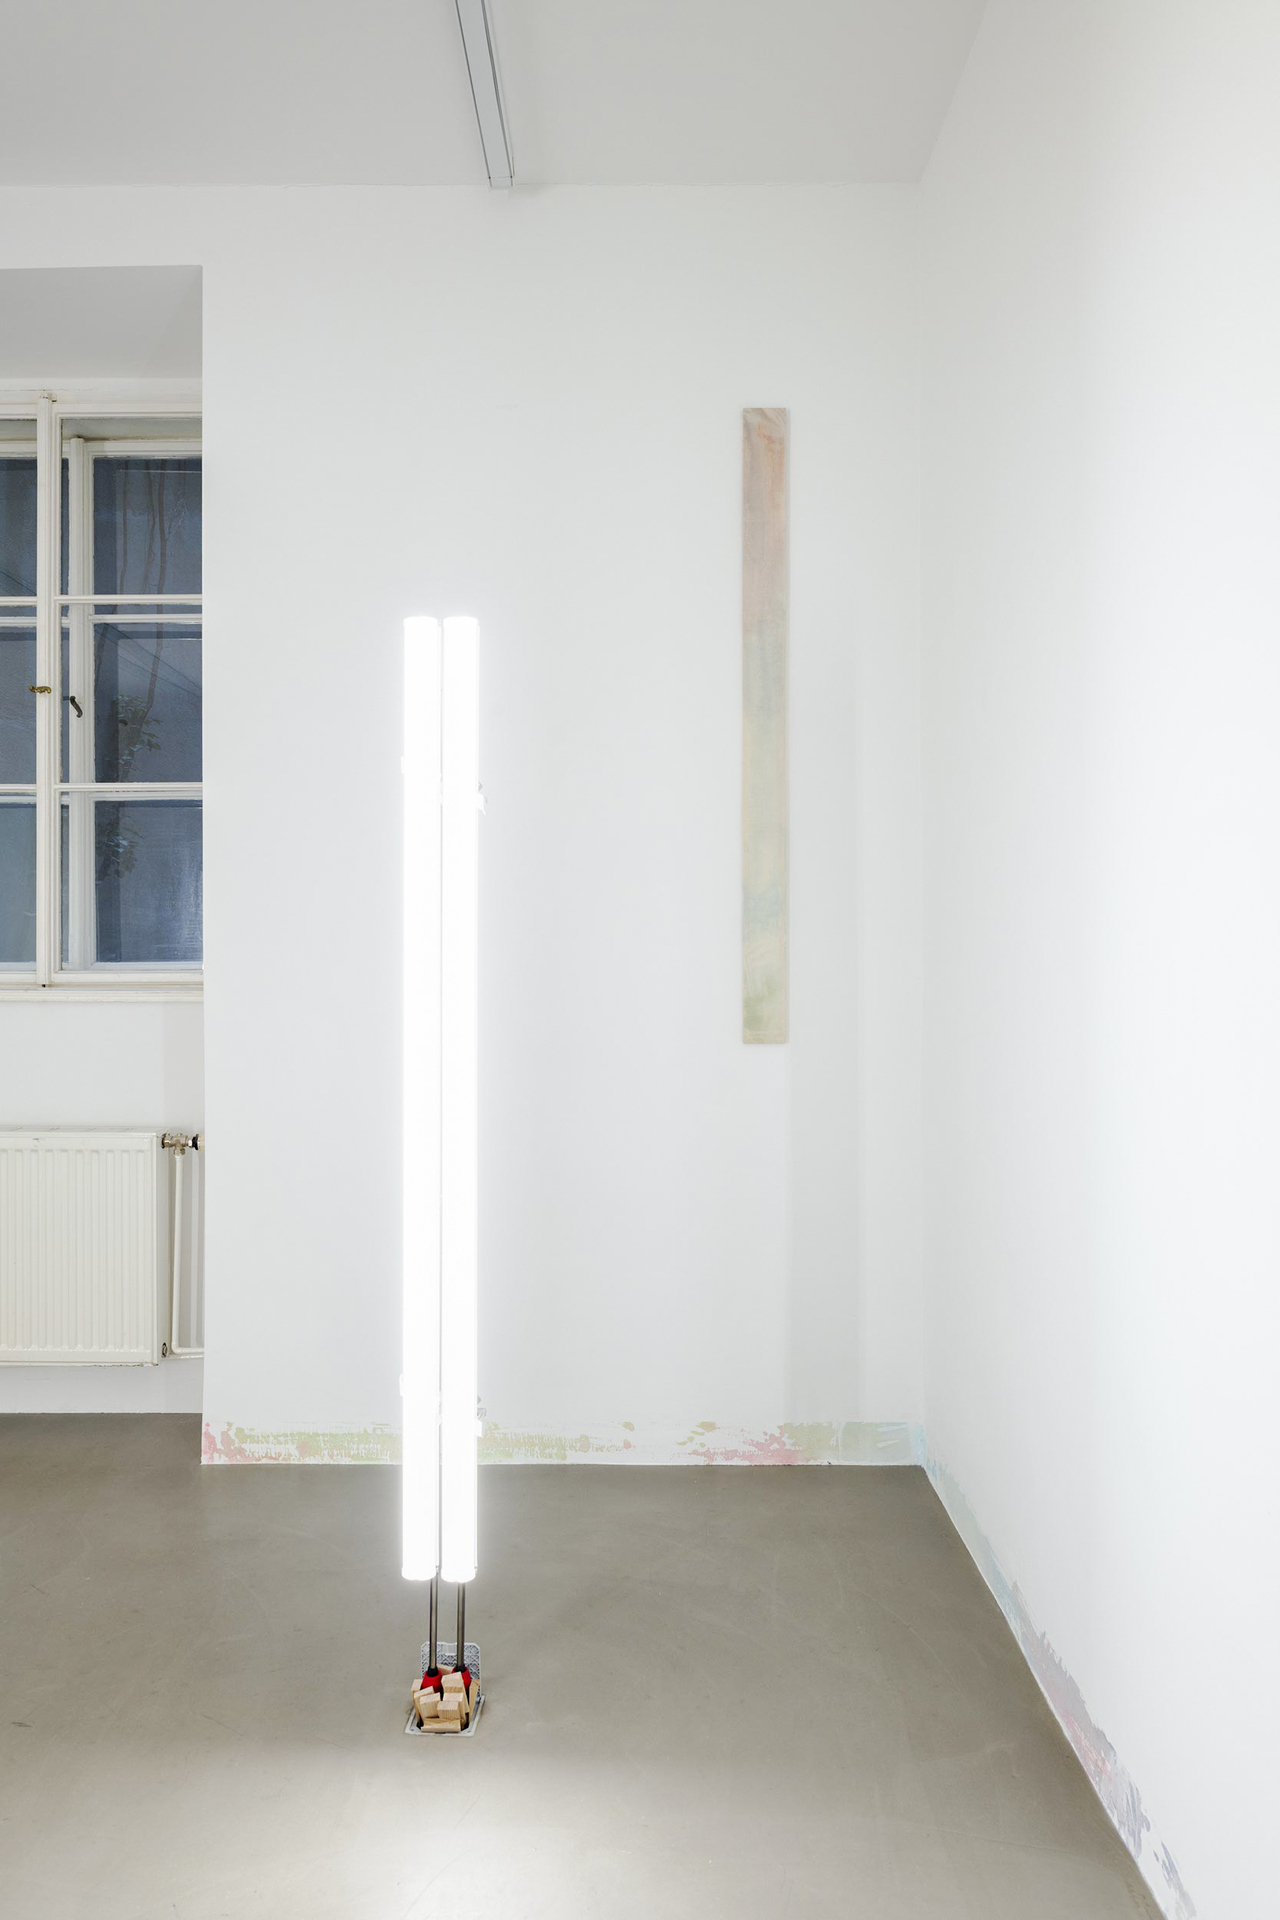 Left: Axel Koschier, o. t., 2021, plastic, metal, wood, LED modules, 180 × 14 × 12 cm. Right: Axel Koschier, 6, 2021, watercolour, cotton, wood, 150 × 10 cm